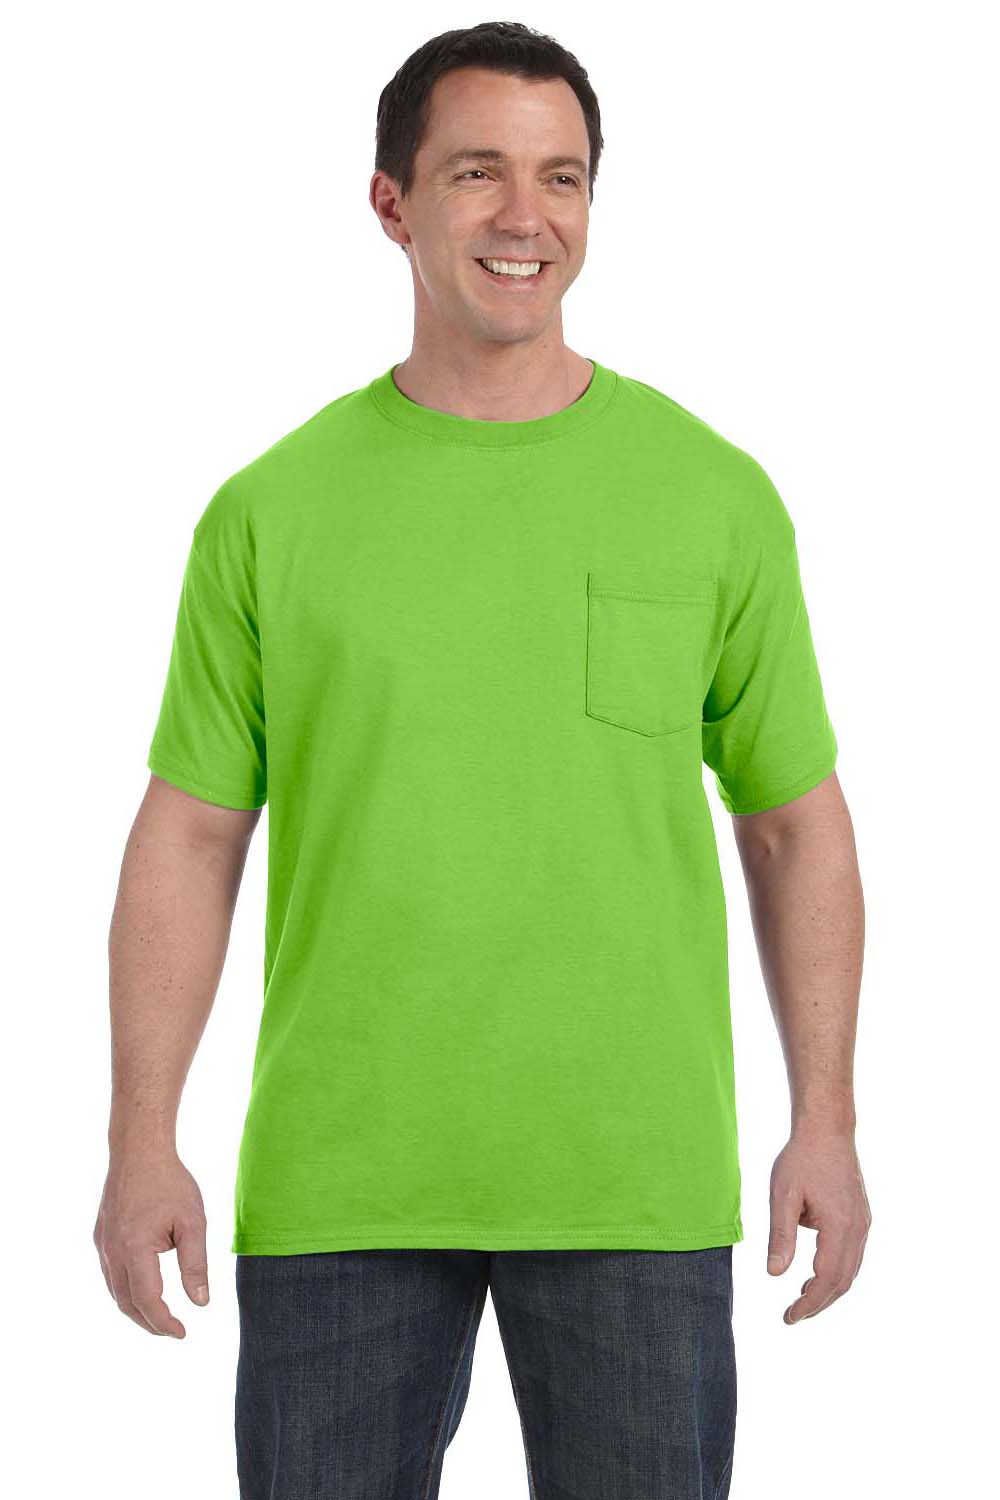 Hanes H5590 Mens ComfortSoft Short Sleeve Crewneck T-Shirt w/ Pocket Lime Green Front